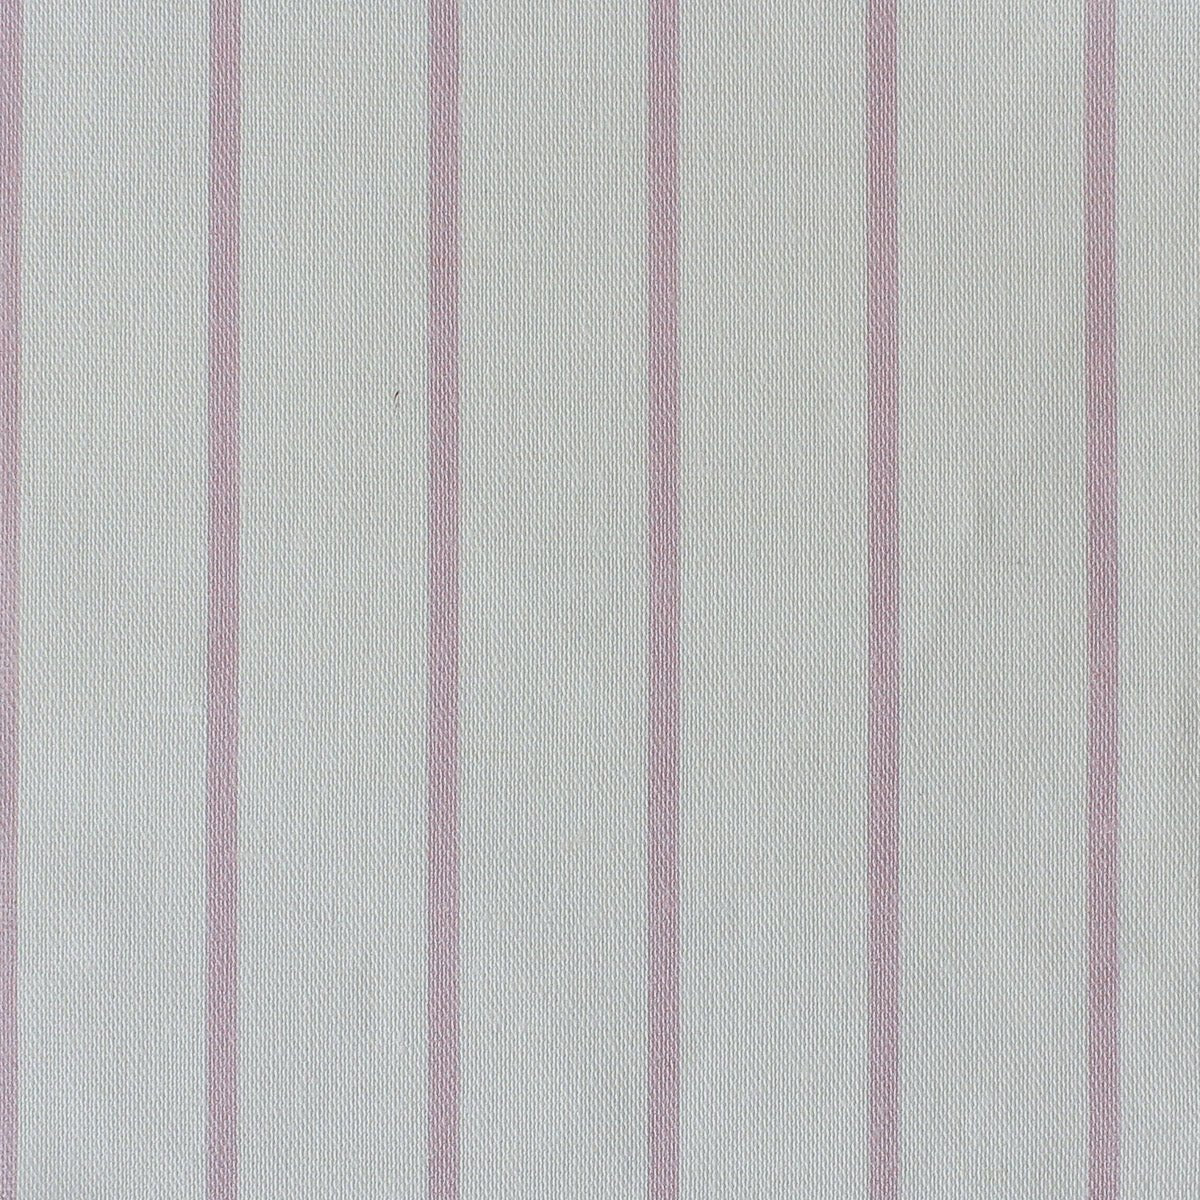 Breton Stripe Fabric - Peony - Hydrangea Lane Home